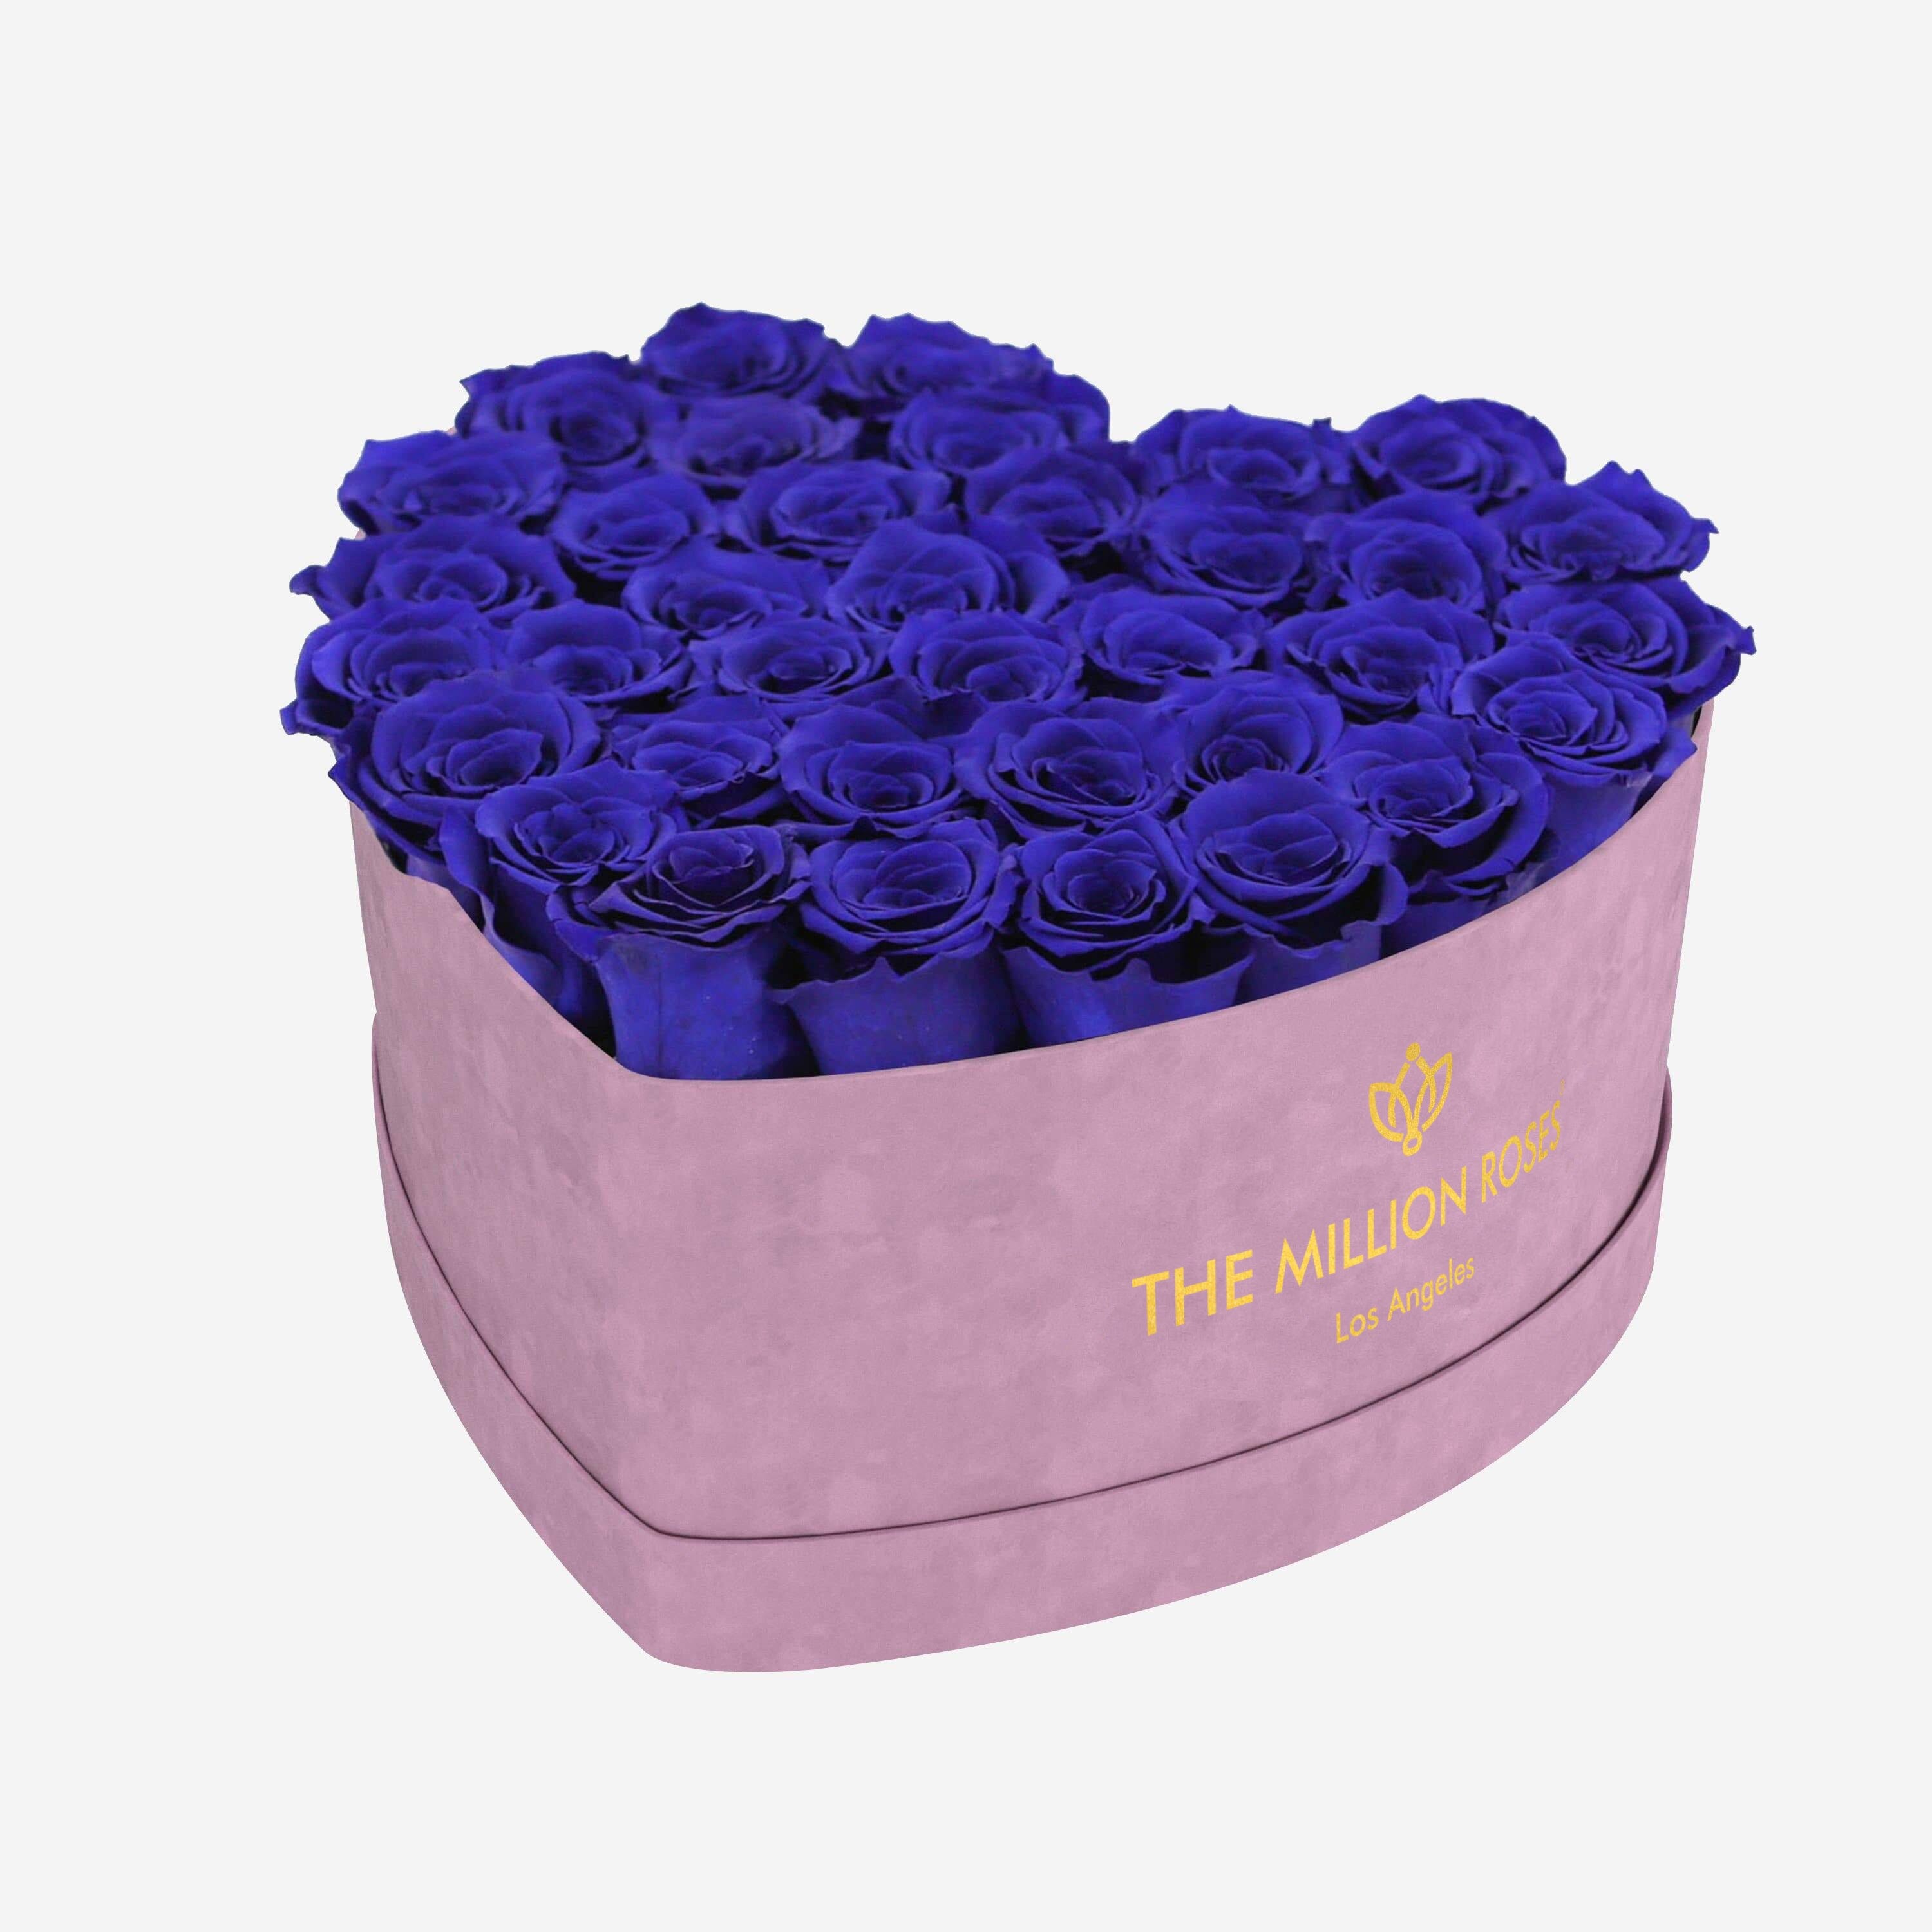 Heart Caja de Gamuza Rosado Pastel Rosas Azul Rey The Million Roses photo